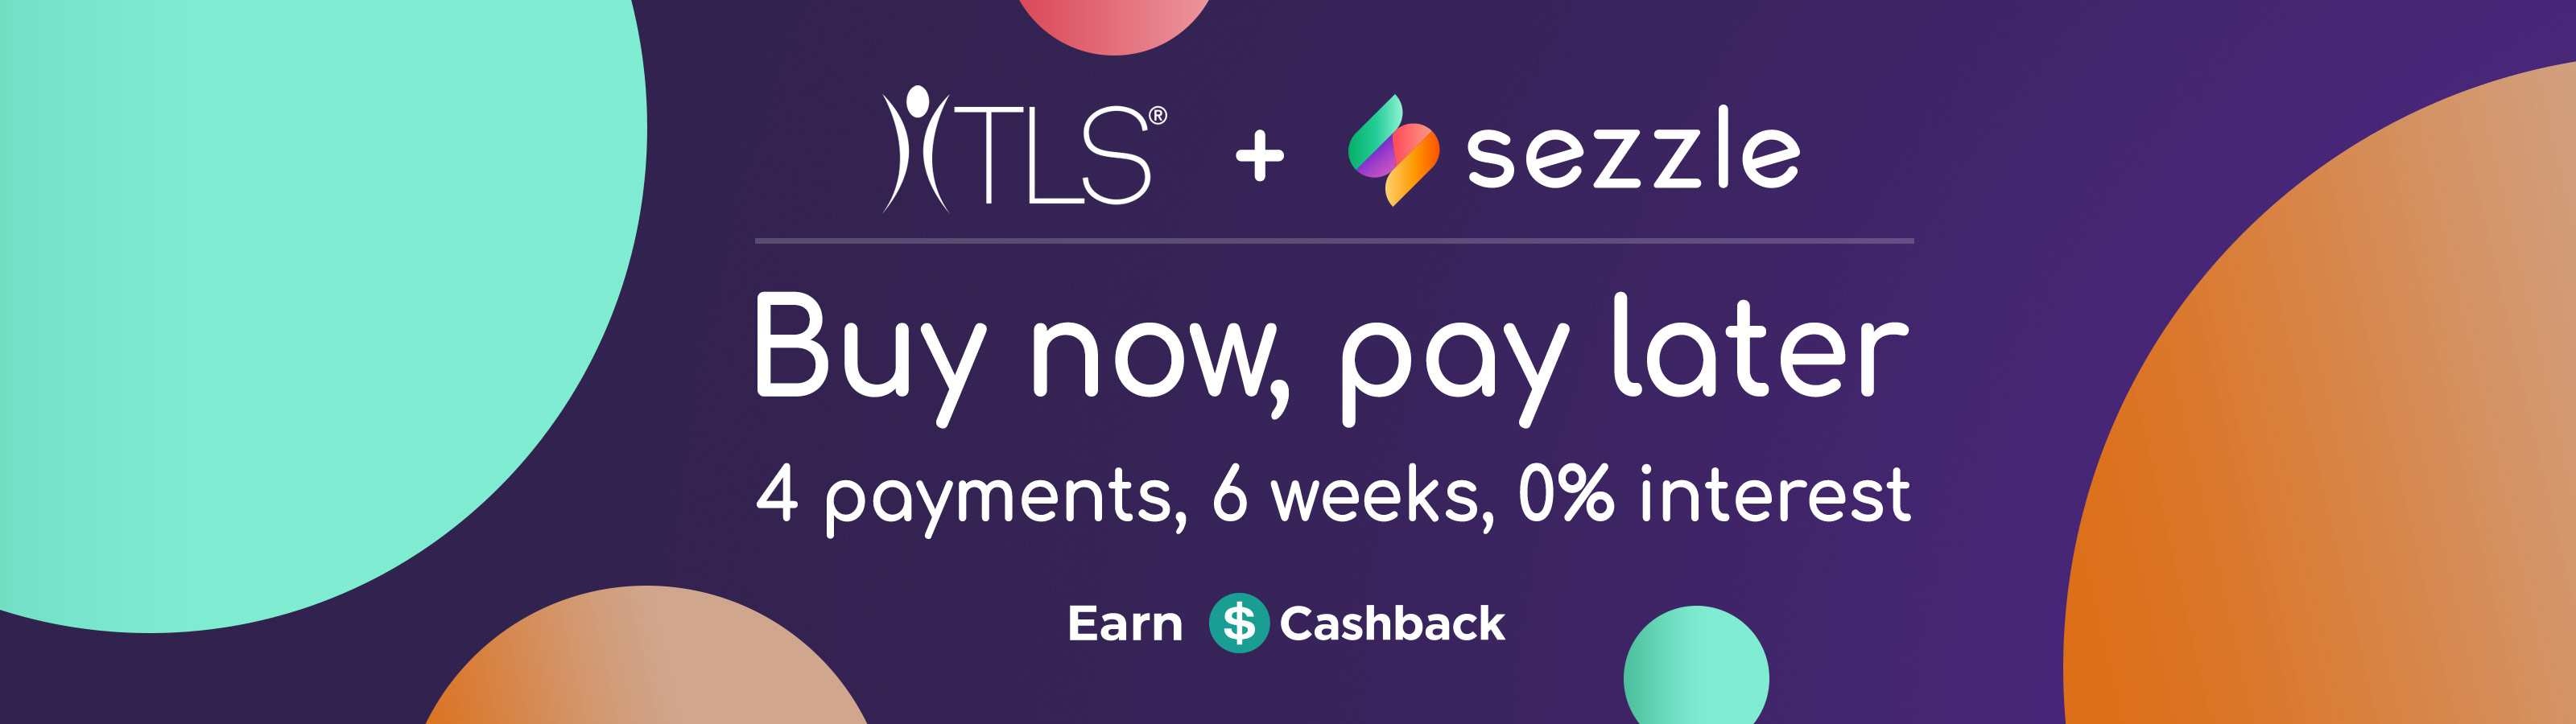 Nutrametrix + Sezzle, Buy now, pay later, 4 payments, 6 weeks, 0% interest, Earn Cashback